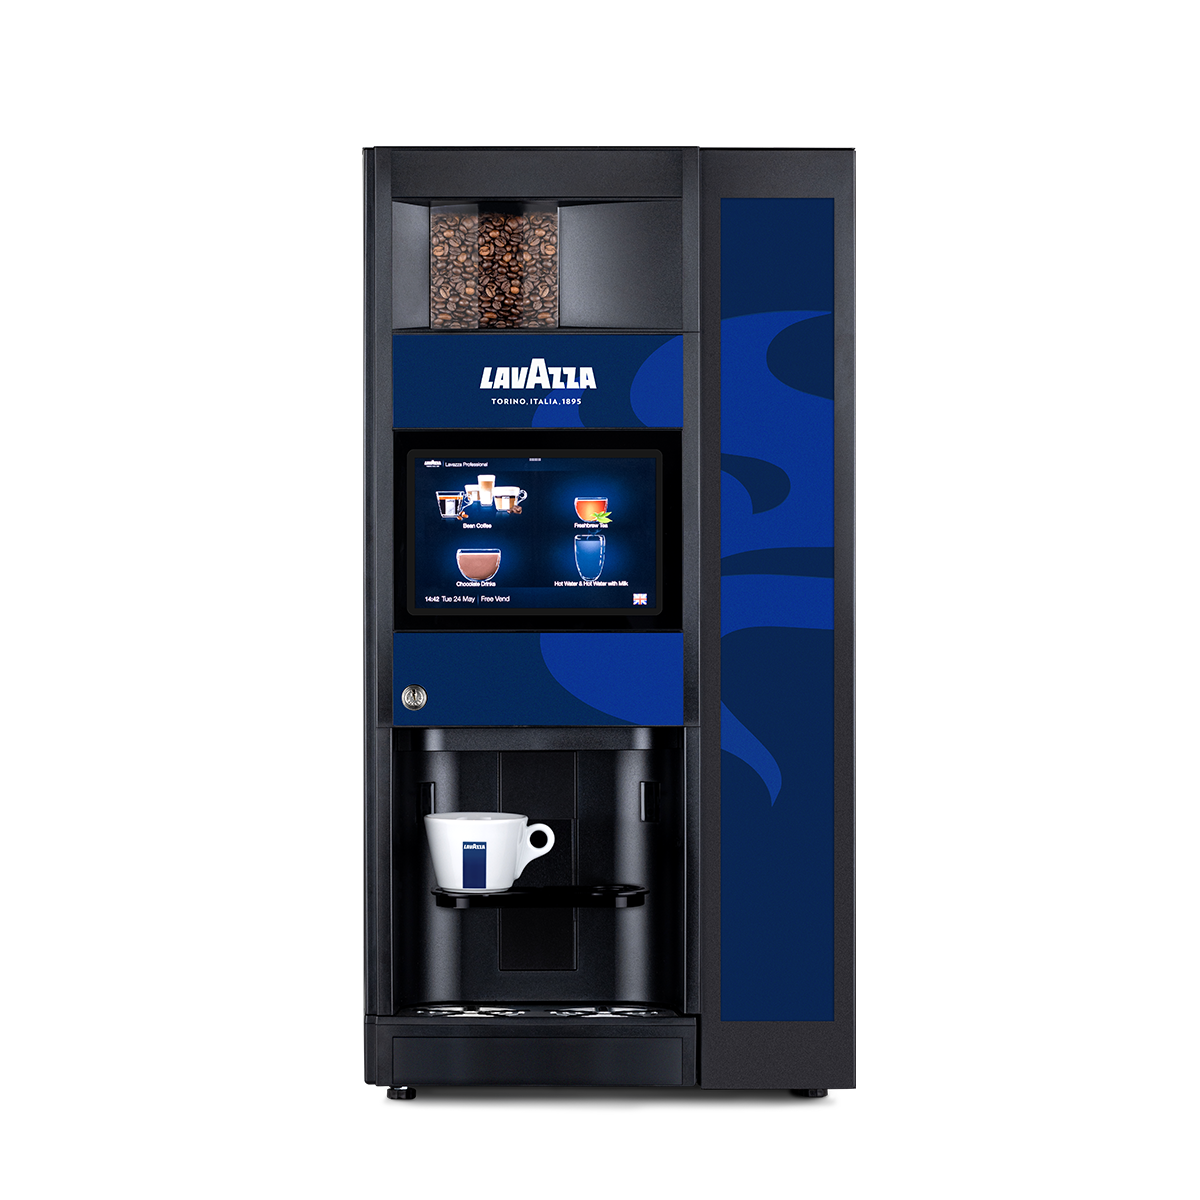 Lavazza 9100 Bean to Cup coffee machine